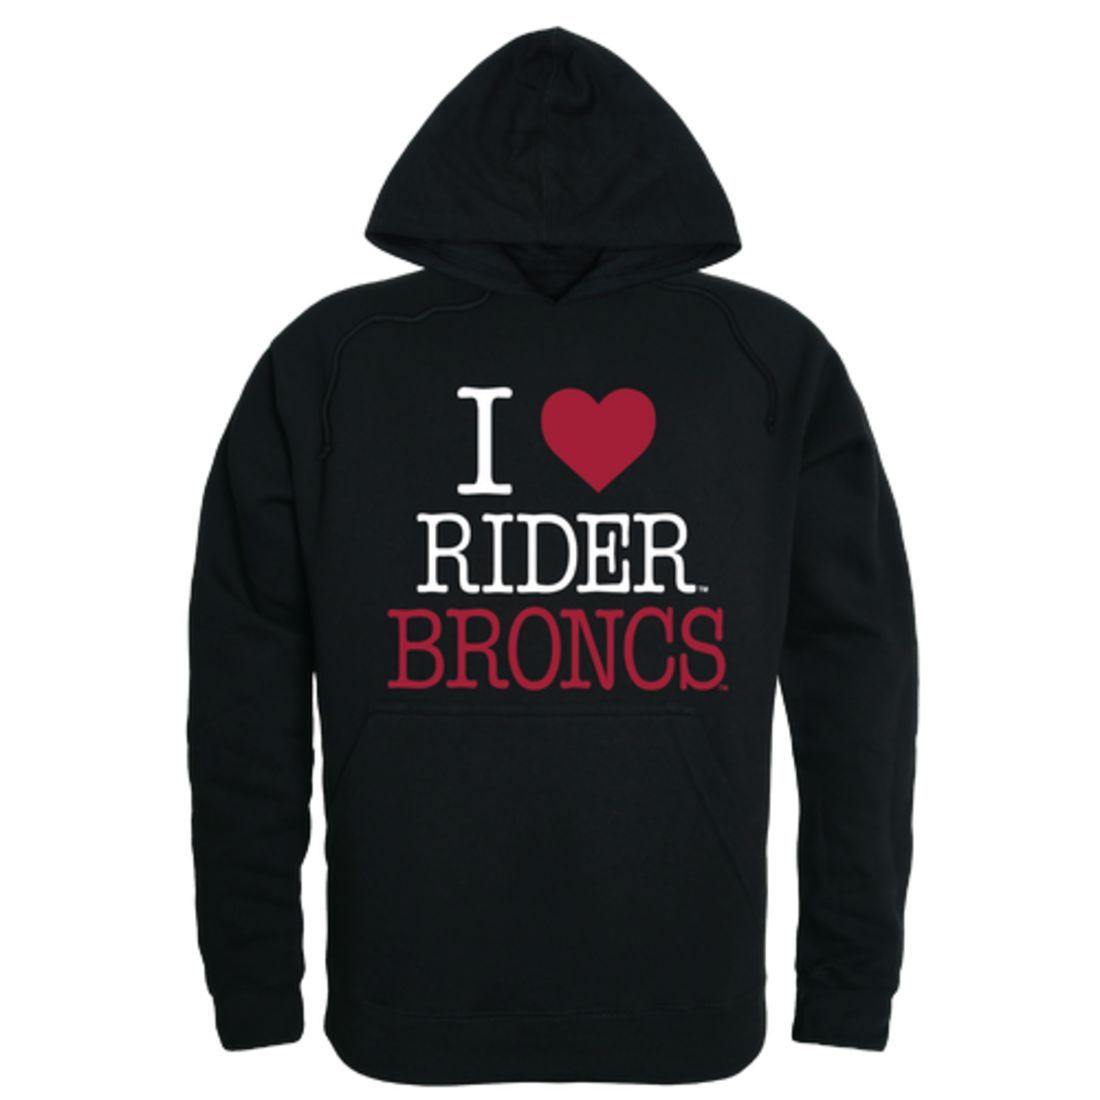 I Love Rider University Broncs Hoodie Sweatshirt-Campus-Wardrobe